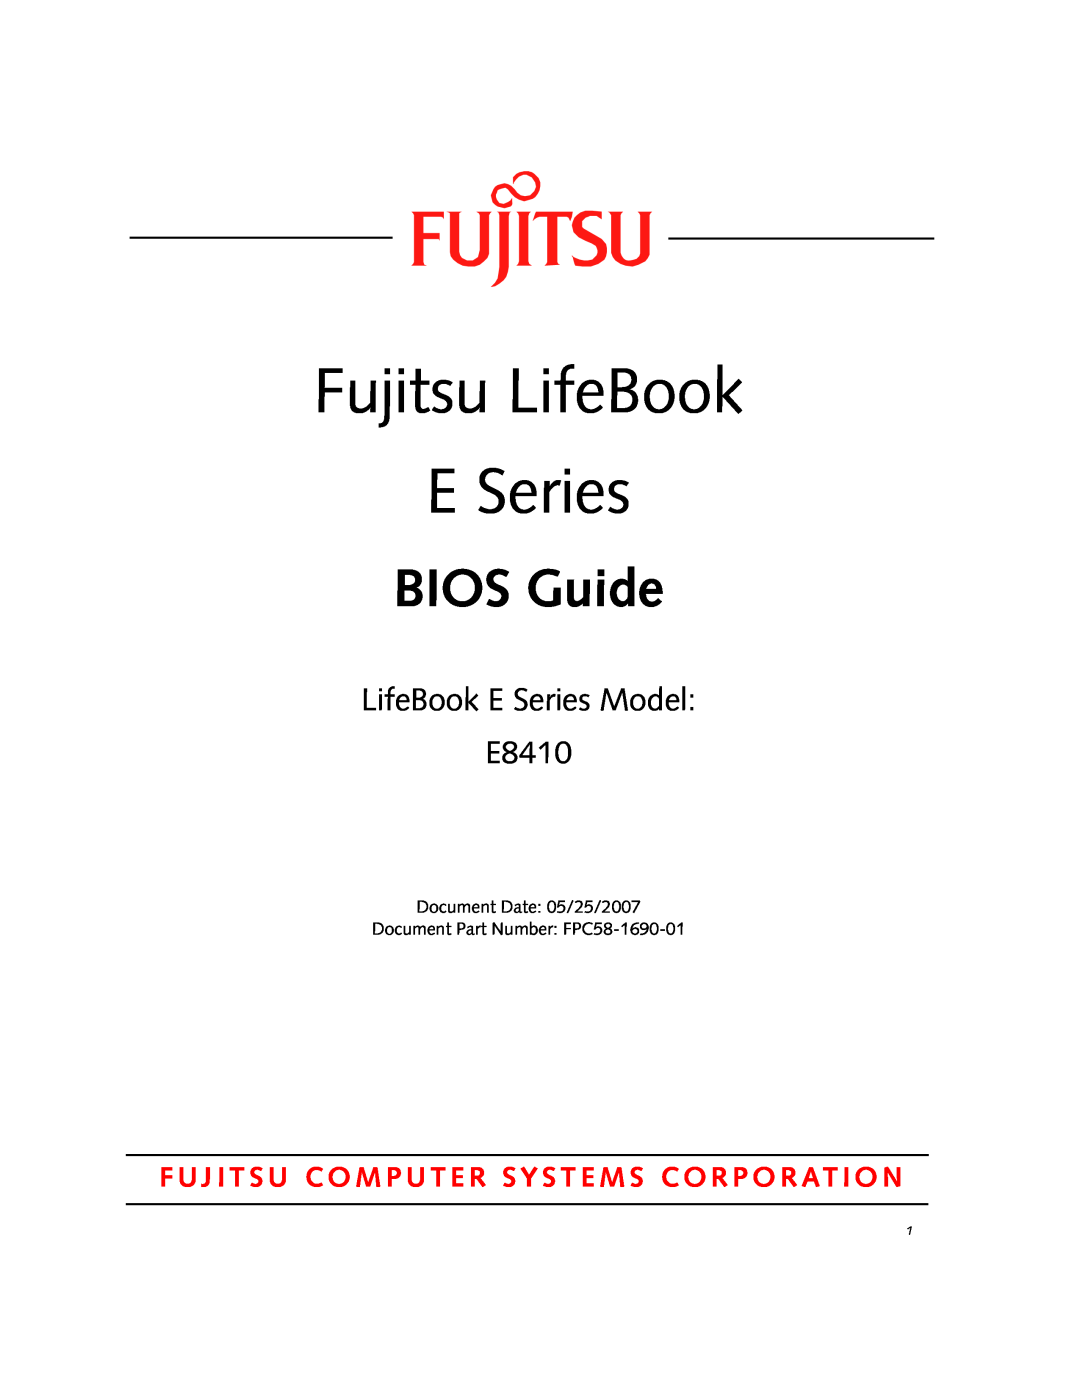 Fujitsu manual Fujitsu LifeBook E Series, BIOS Guide, LifeBook E Series Model E8410 